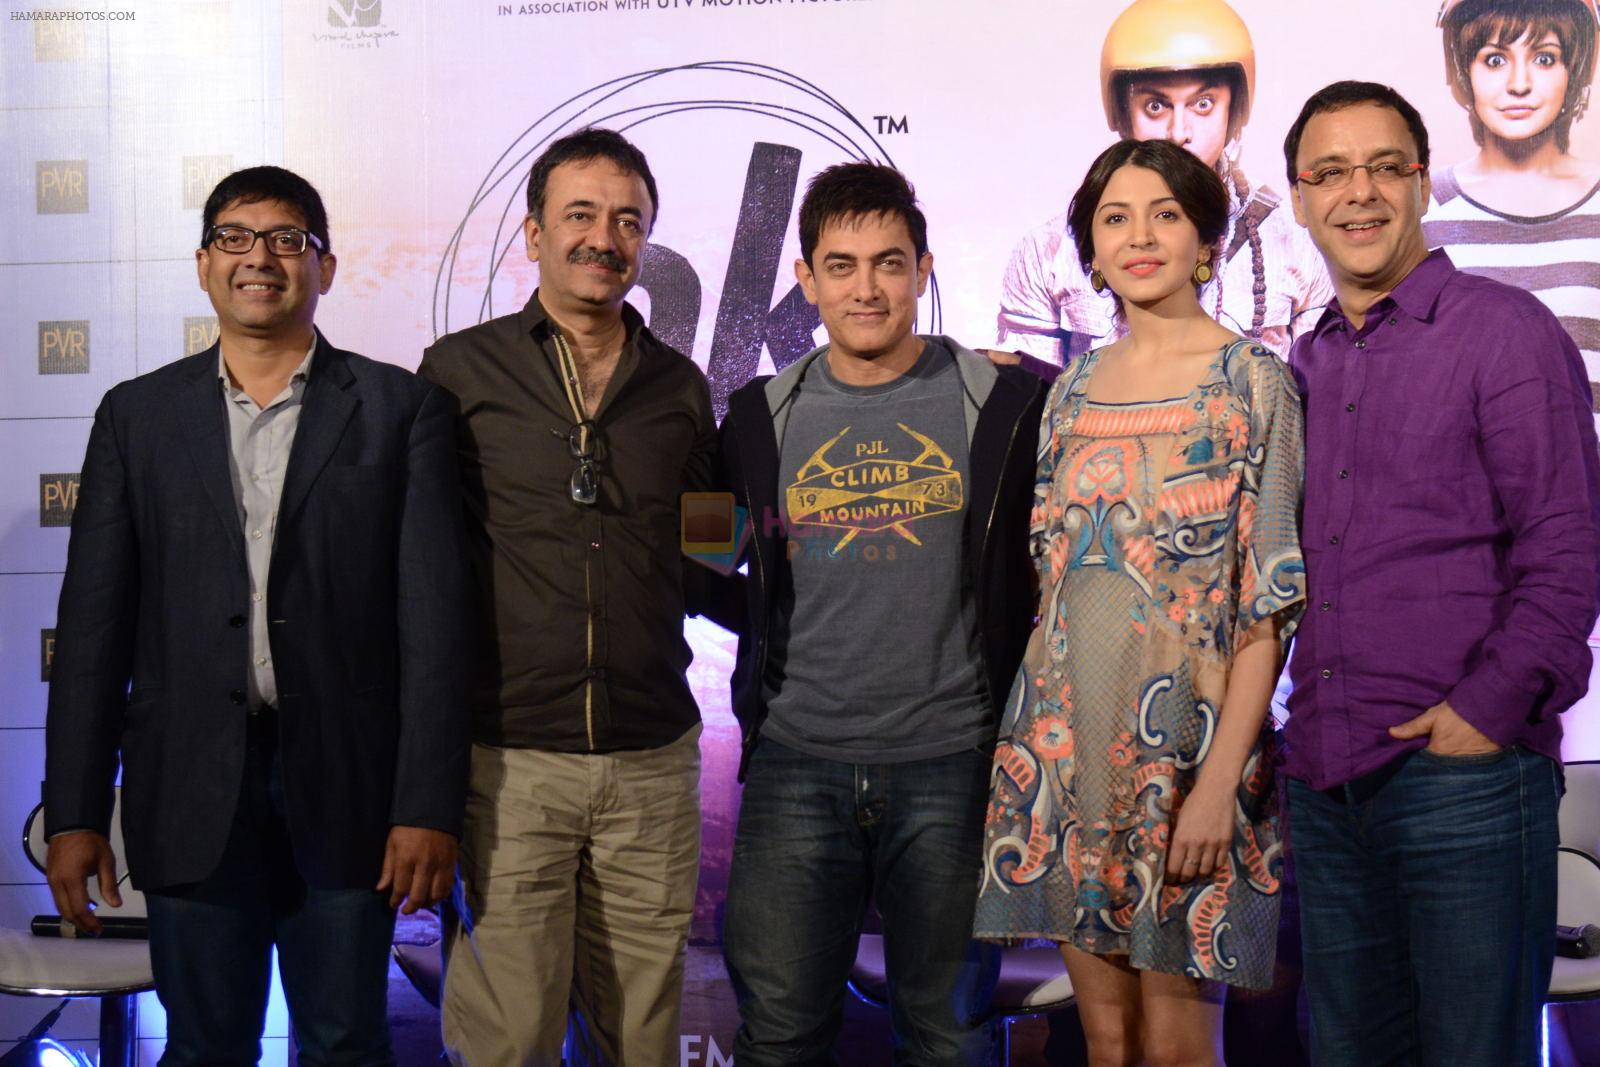 Aamir khan, Anushka Sharma, Rajkumar Hirani, Vidhu Vinod Chopra at PK Movie Press Meet in Hyderabad on 9th Dec 2014